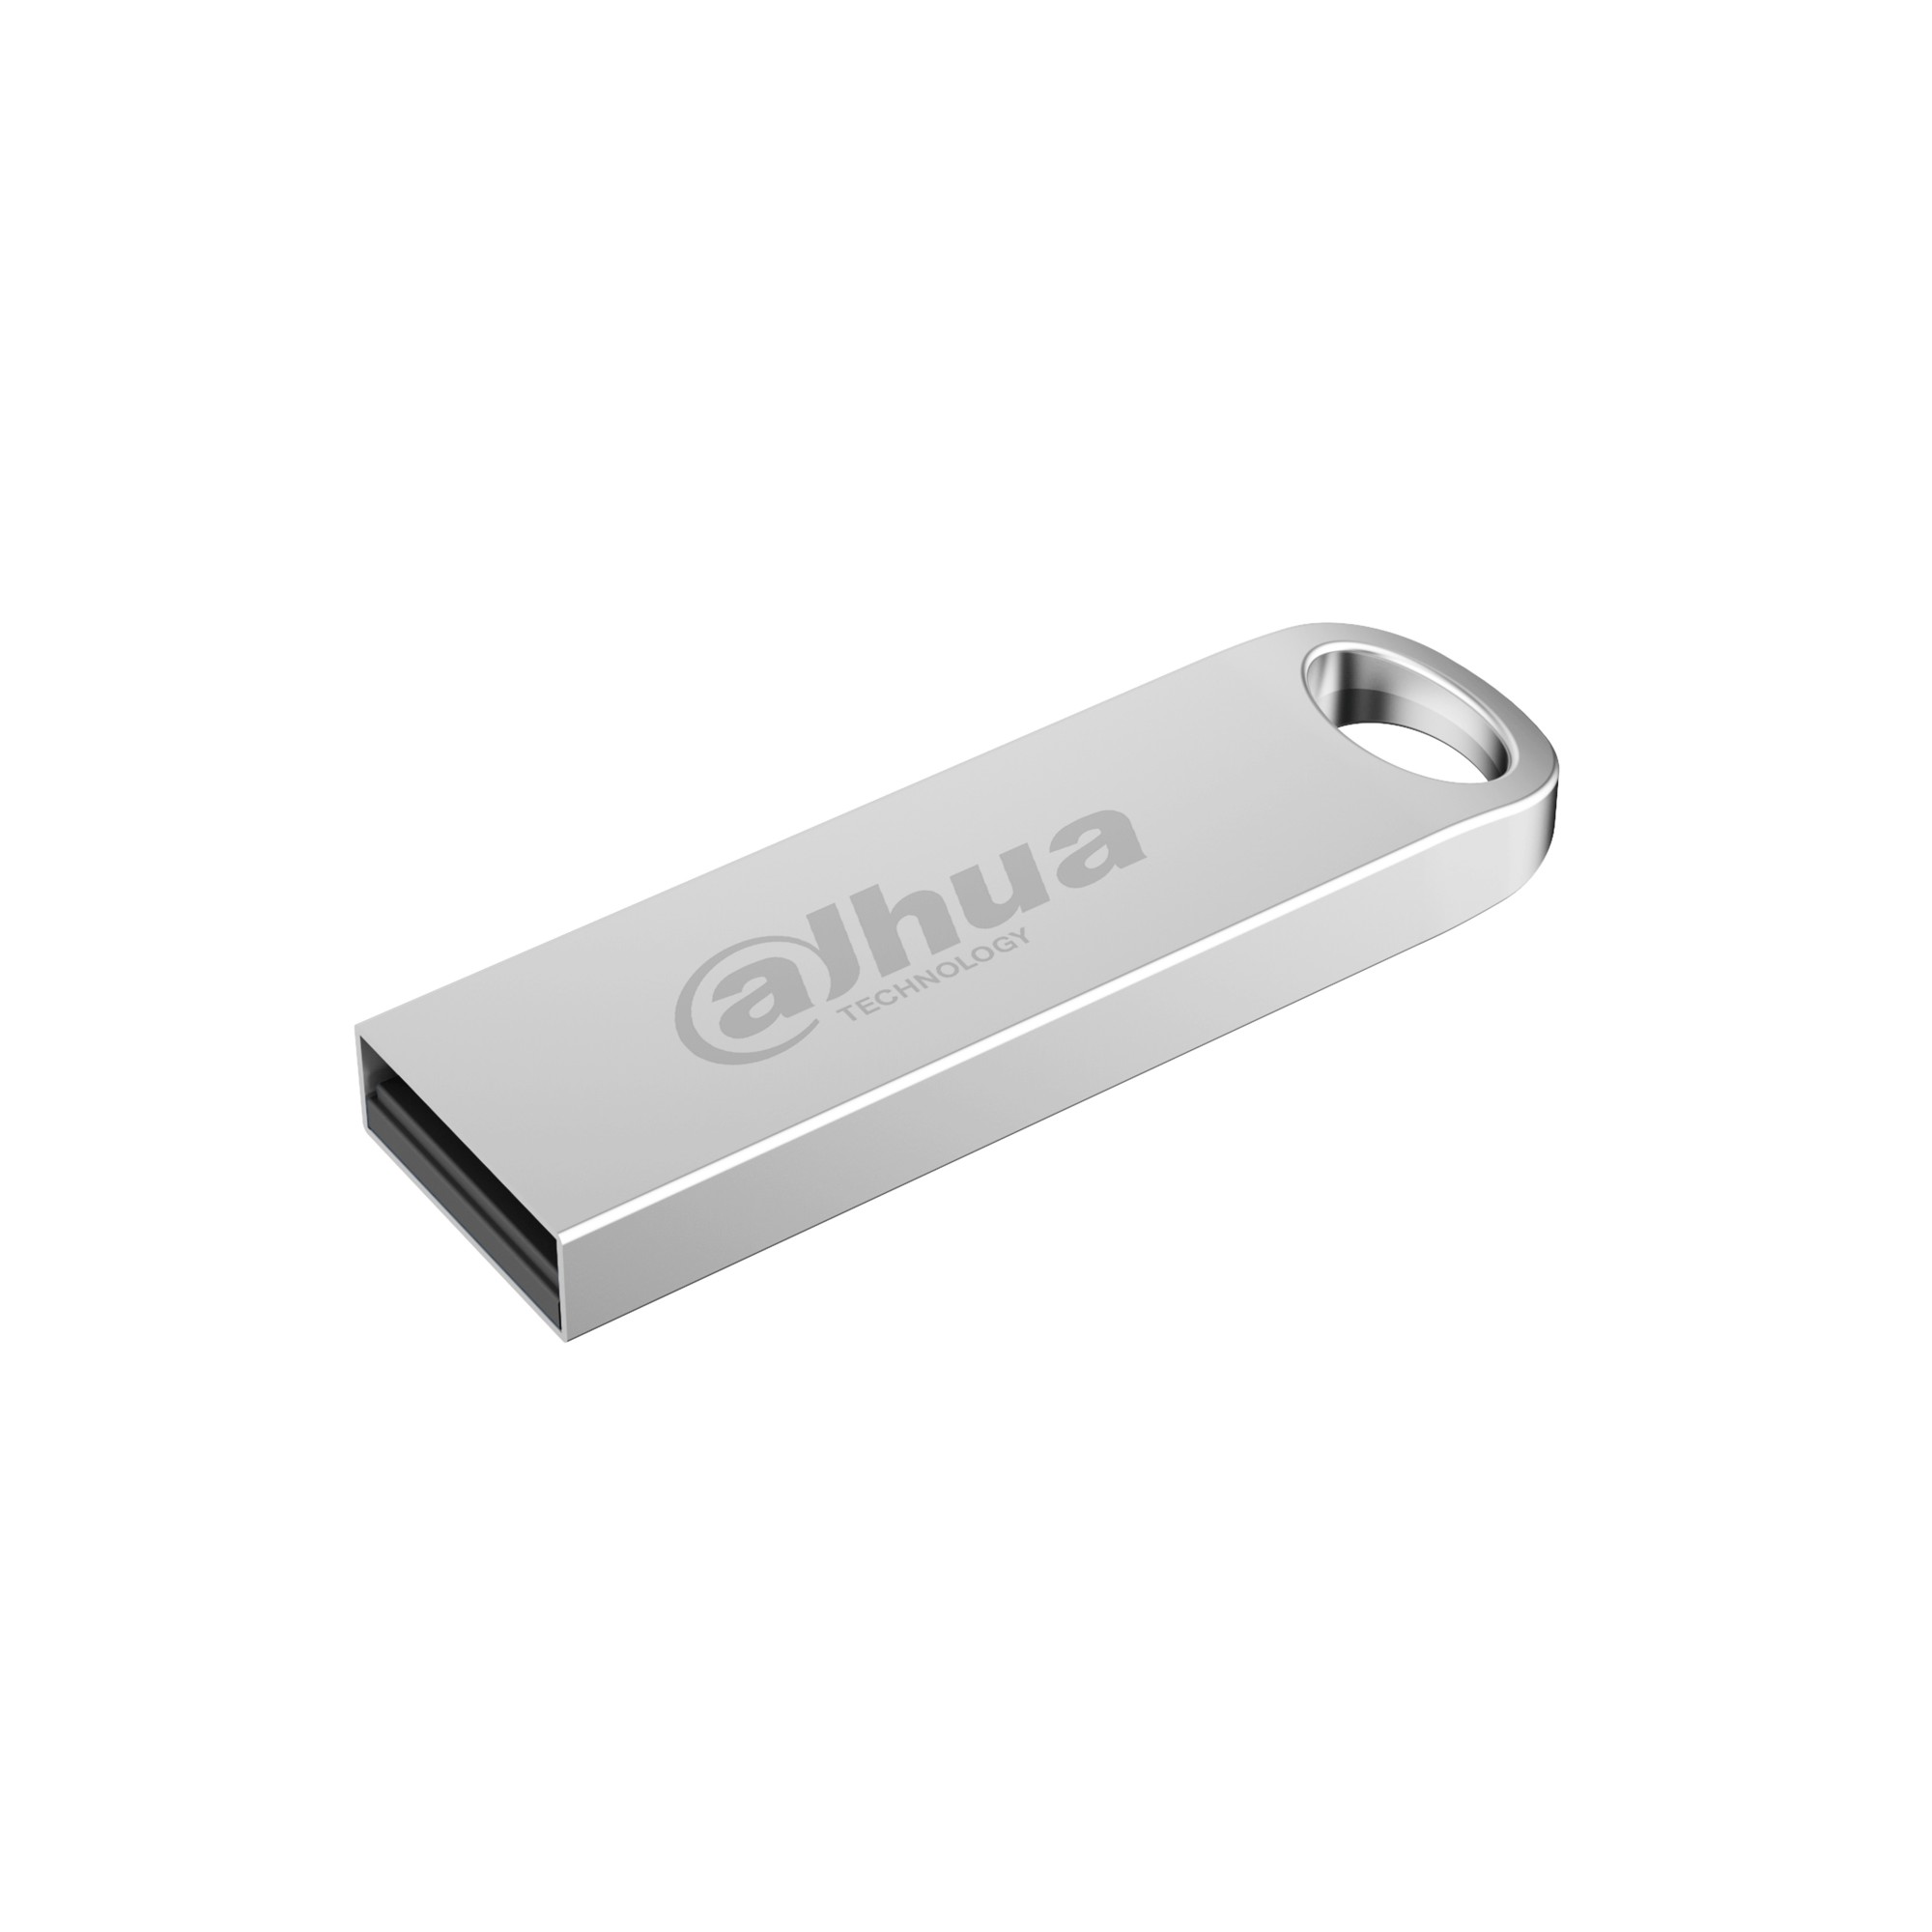 DHI-USB-U106-20-32GB Memoria Usb Dahua Technology DhiUsbU1062032Gb  Memoria Usb Metal 32Gb DhiUsbU1062032Gb  DHI-USB-U106-20-32GB  DHI-USB-U106-20-32GB